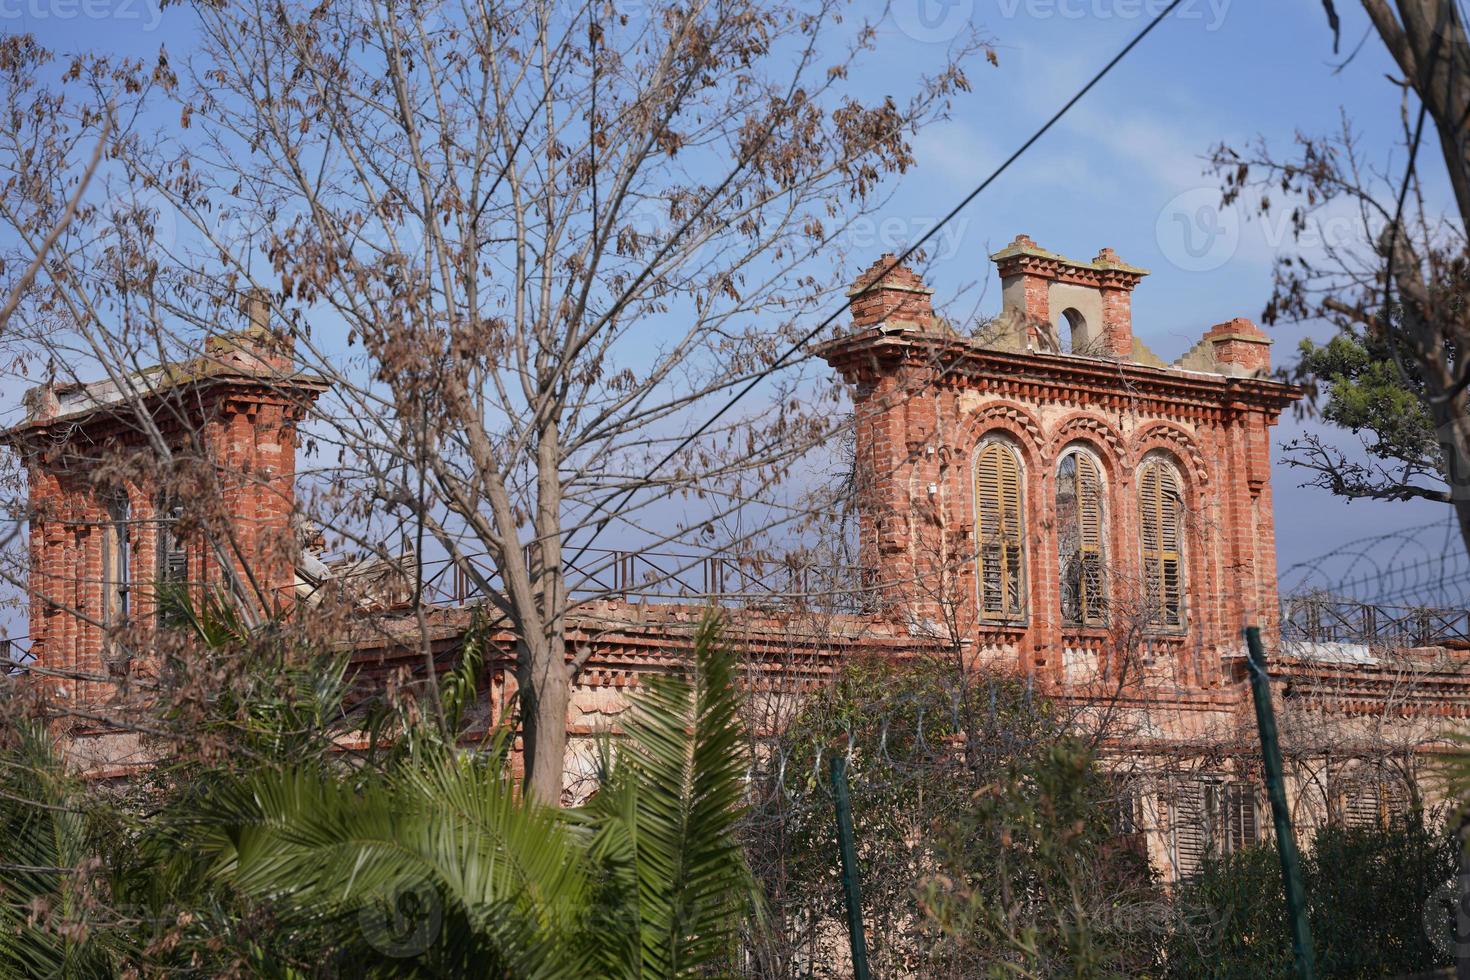 House of Leon Trotsky in Buyuk Ada in Istanbul, Turkiye photo